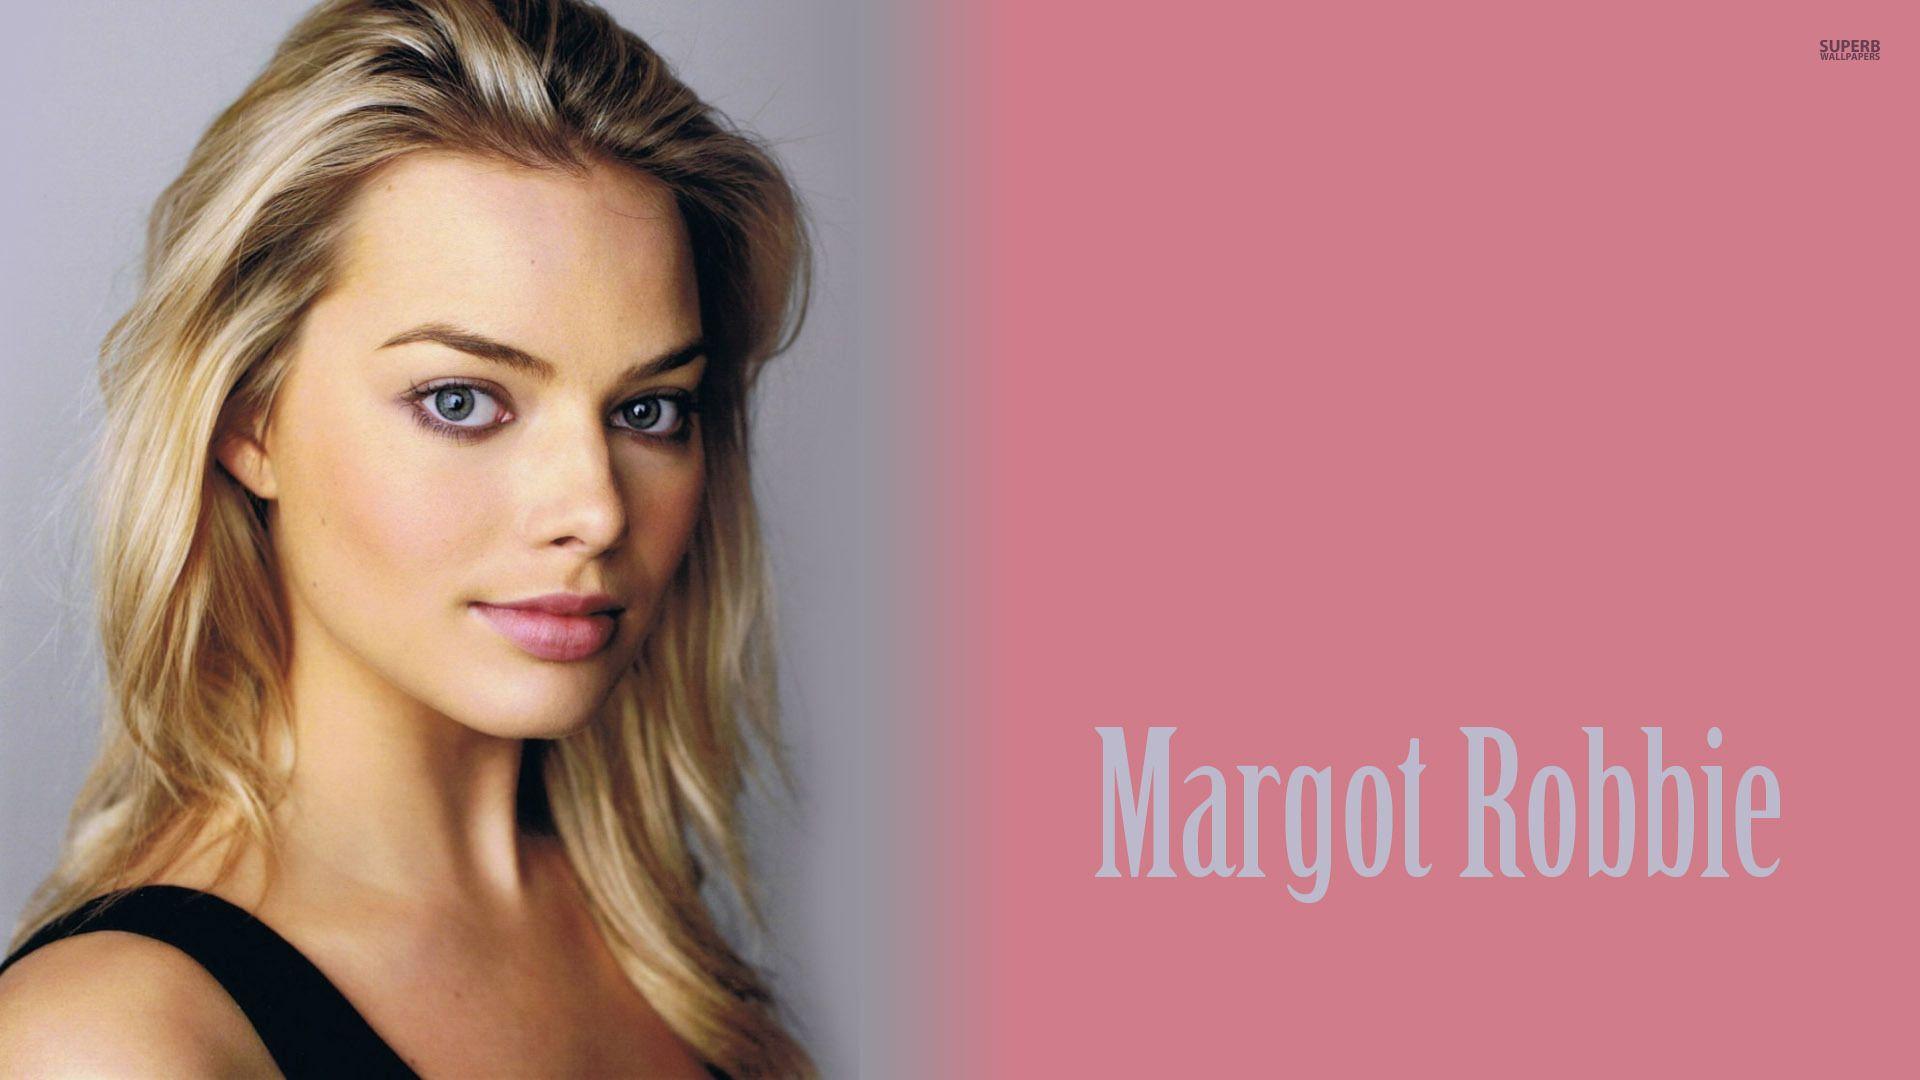 Margot Robbie Wallpaper for Desktop